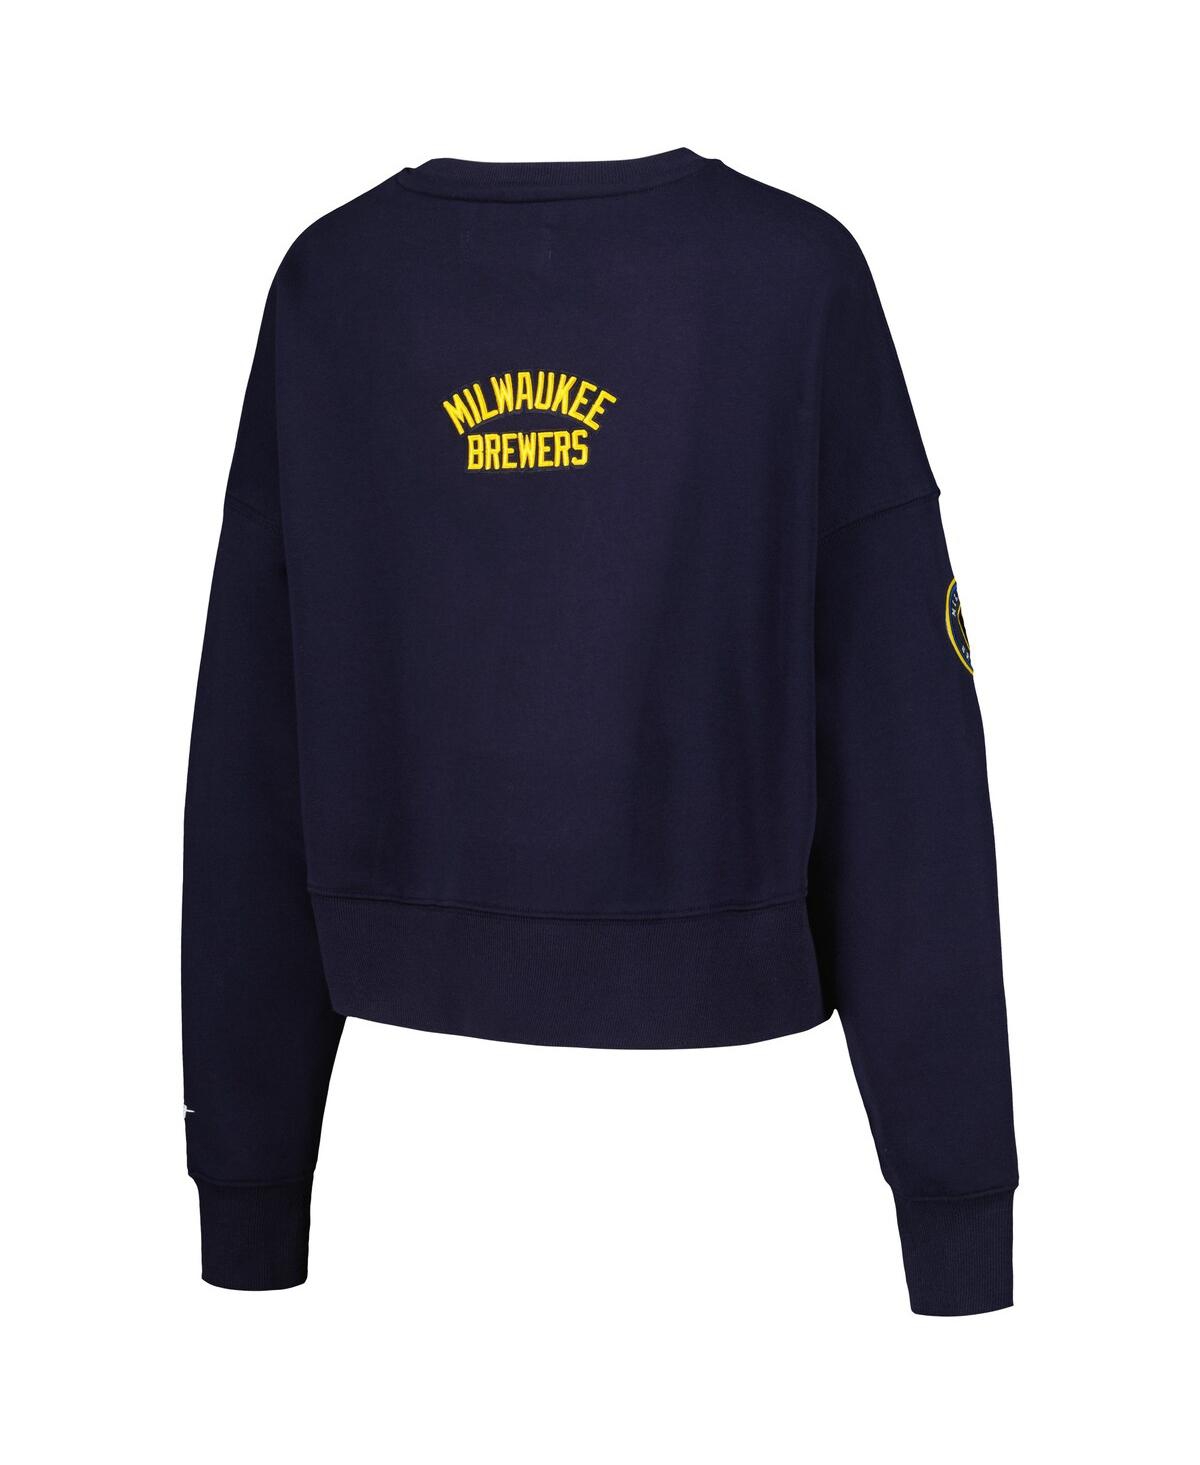 Shop Pro Standard Women's  Navy Milwaukee Brewers Painted Sky Pullover Sweatshirt